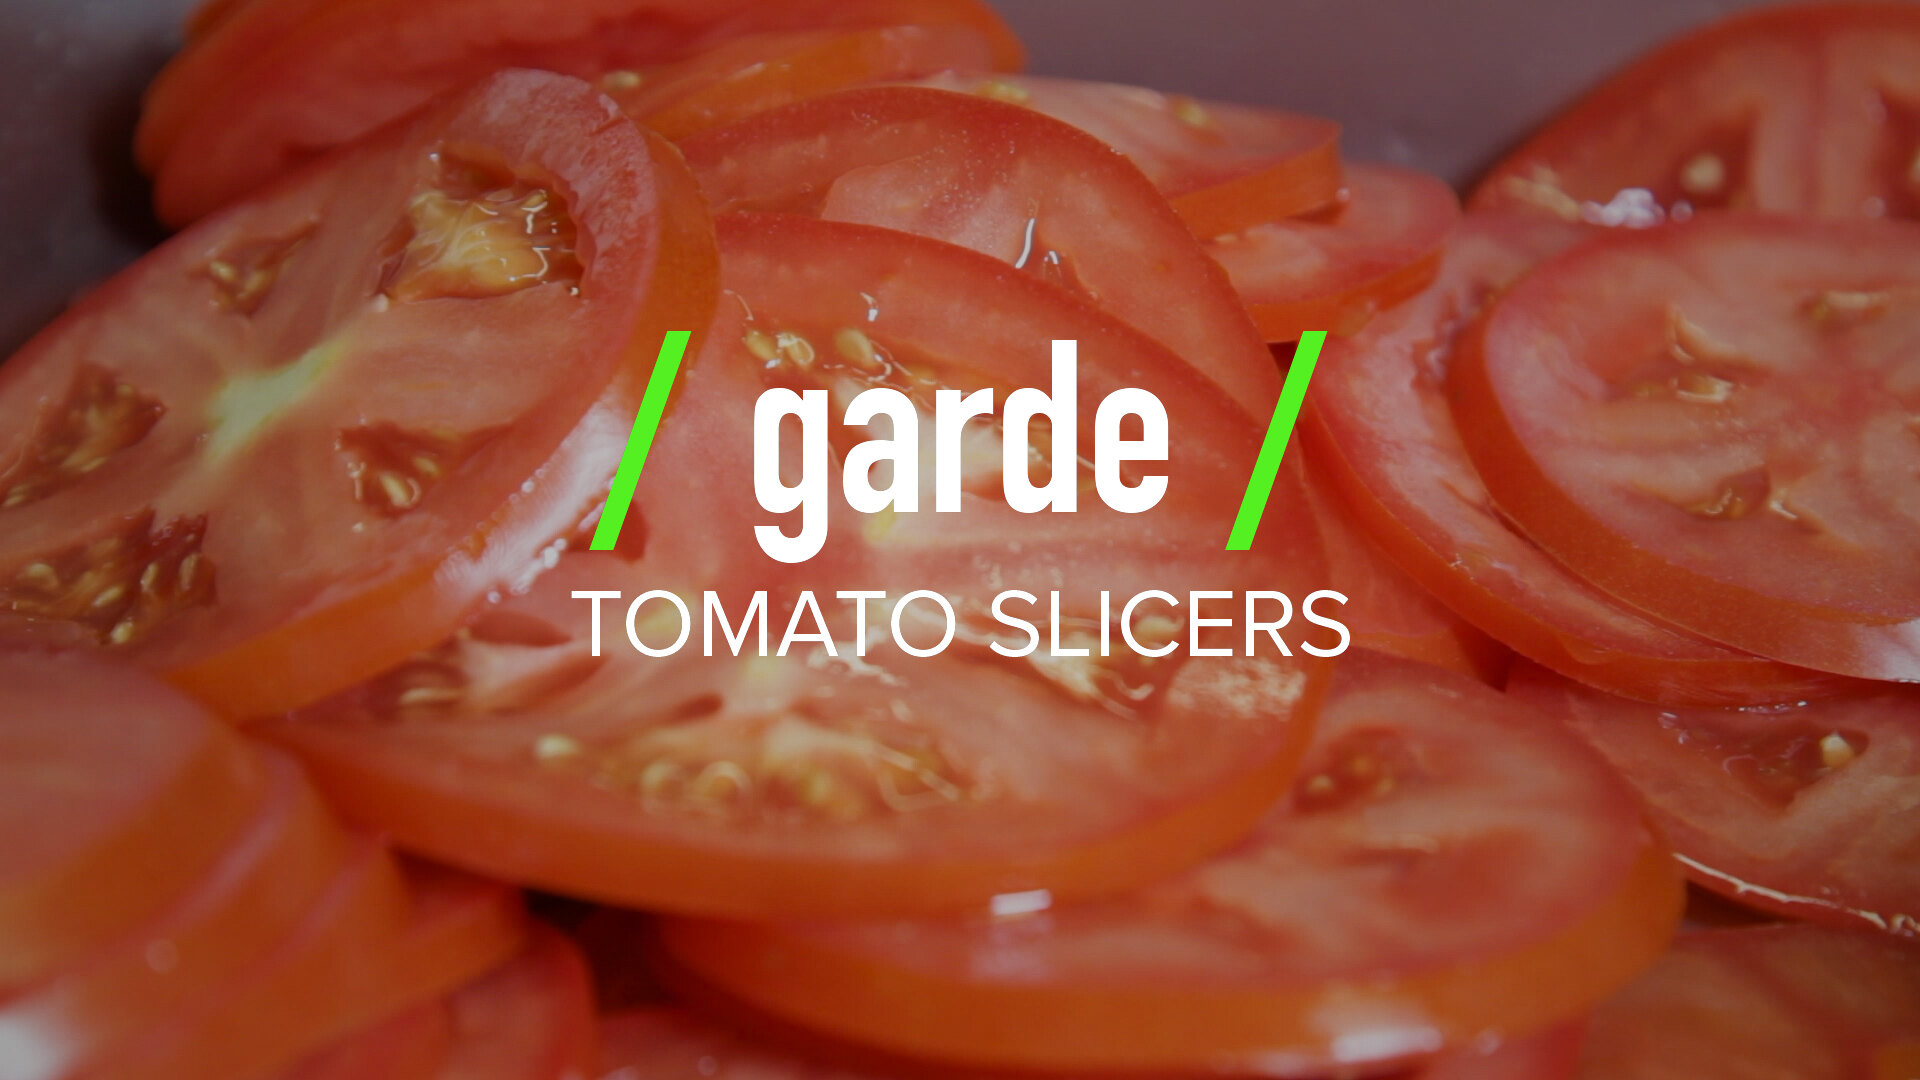 https://cdn.webstaurantstore.com/images/videos/extra_large/garde_tomato_slicer.jpg